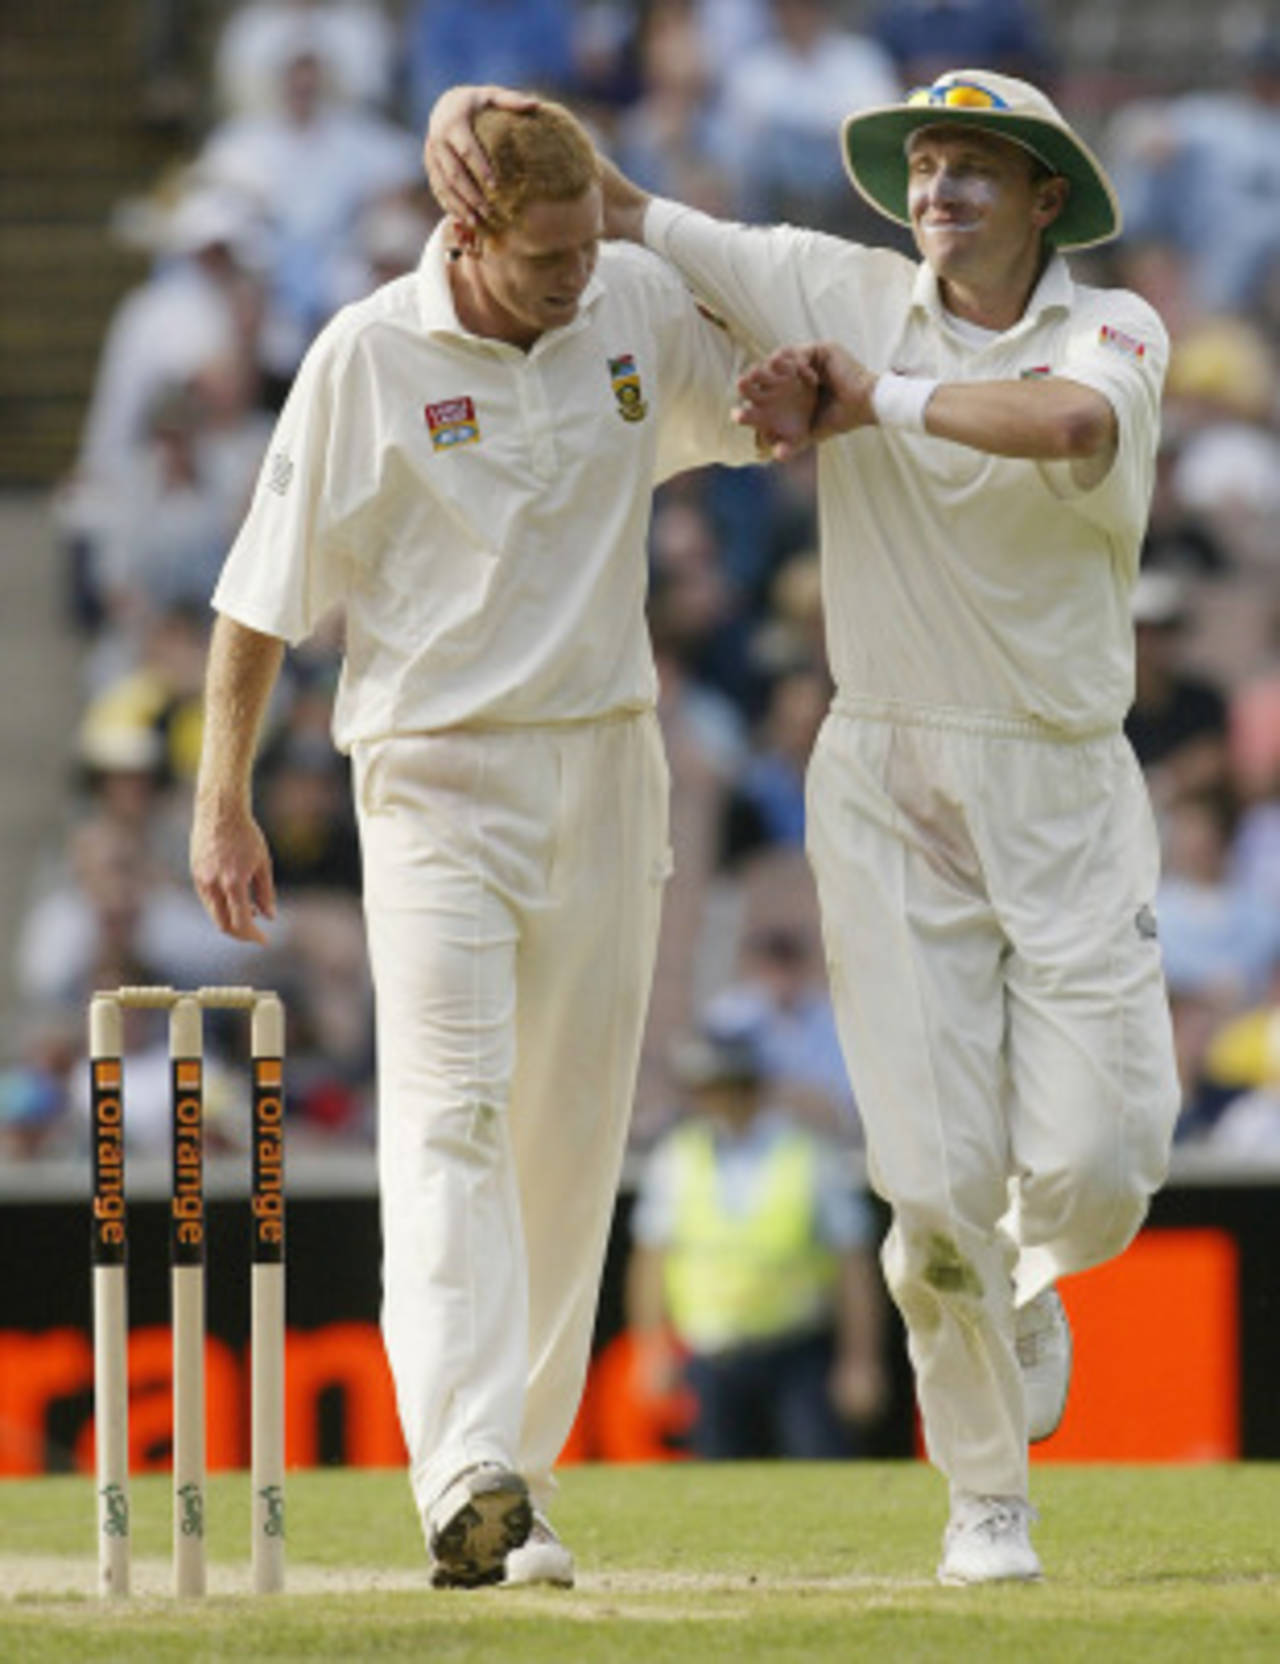 Allan Donald congratulates Shaun Pollock on taking a wicket, Australia v South Africa, 2nd Test, MCG, 3rd day, December 28, 2001